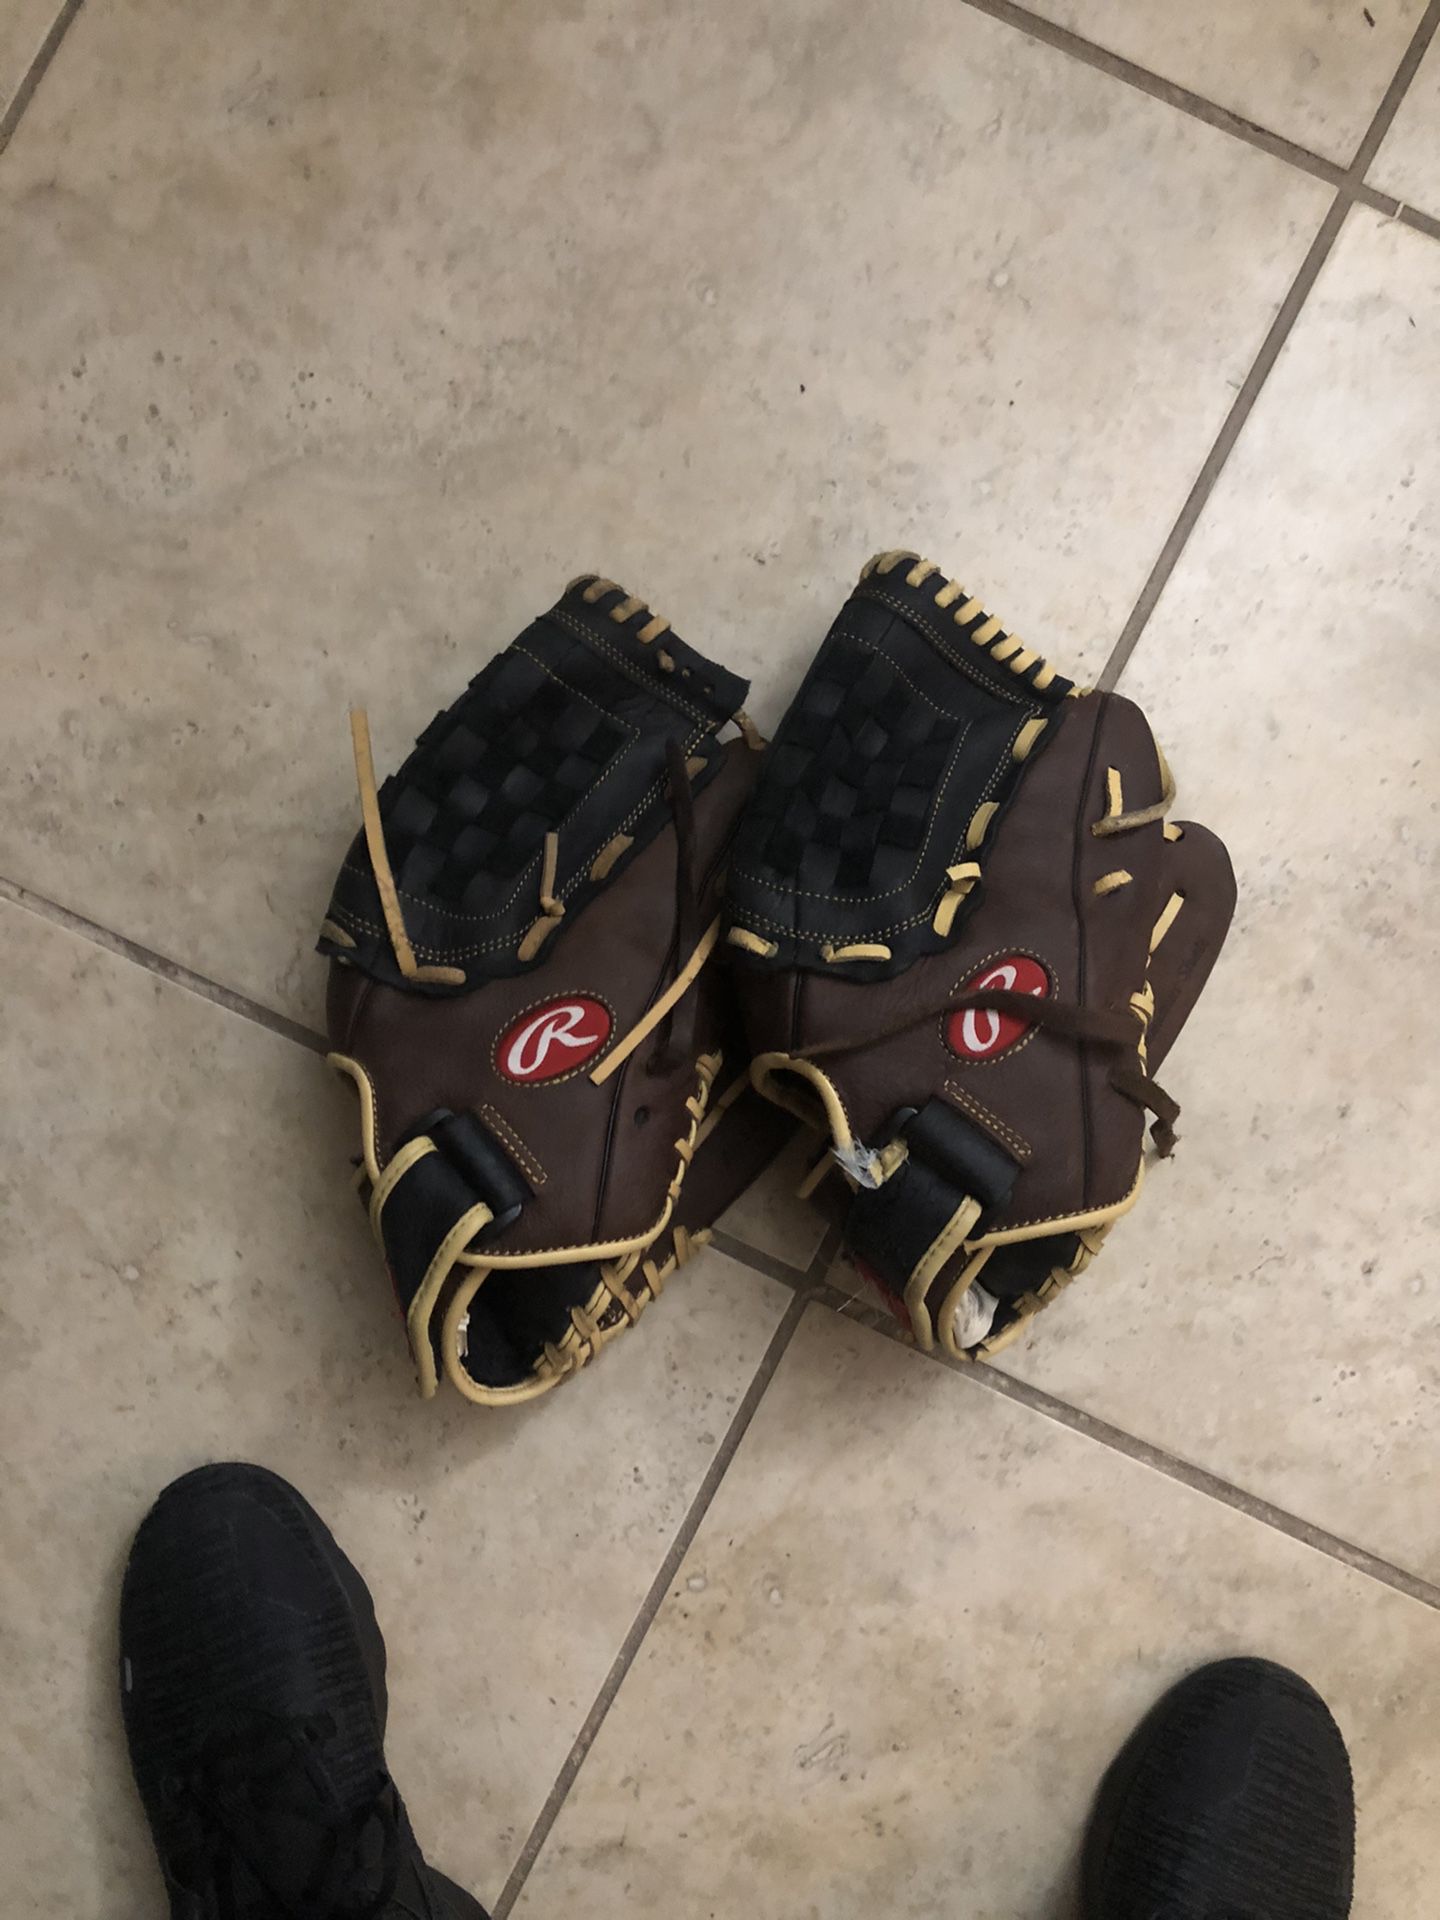 Two Rawling Baseball Gloves